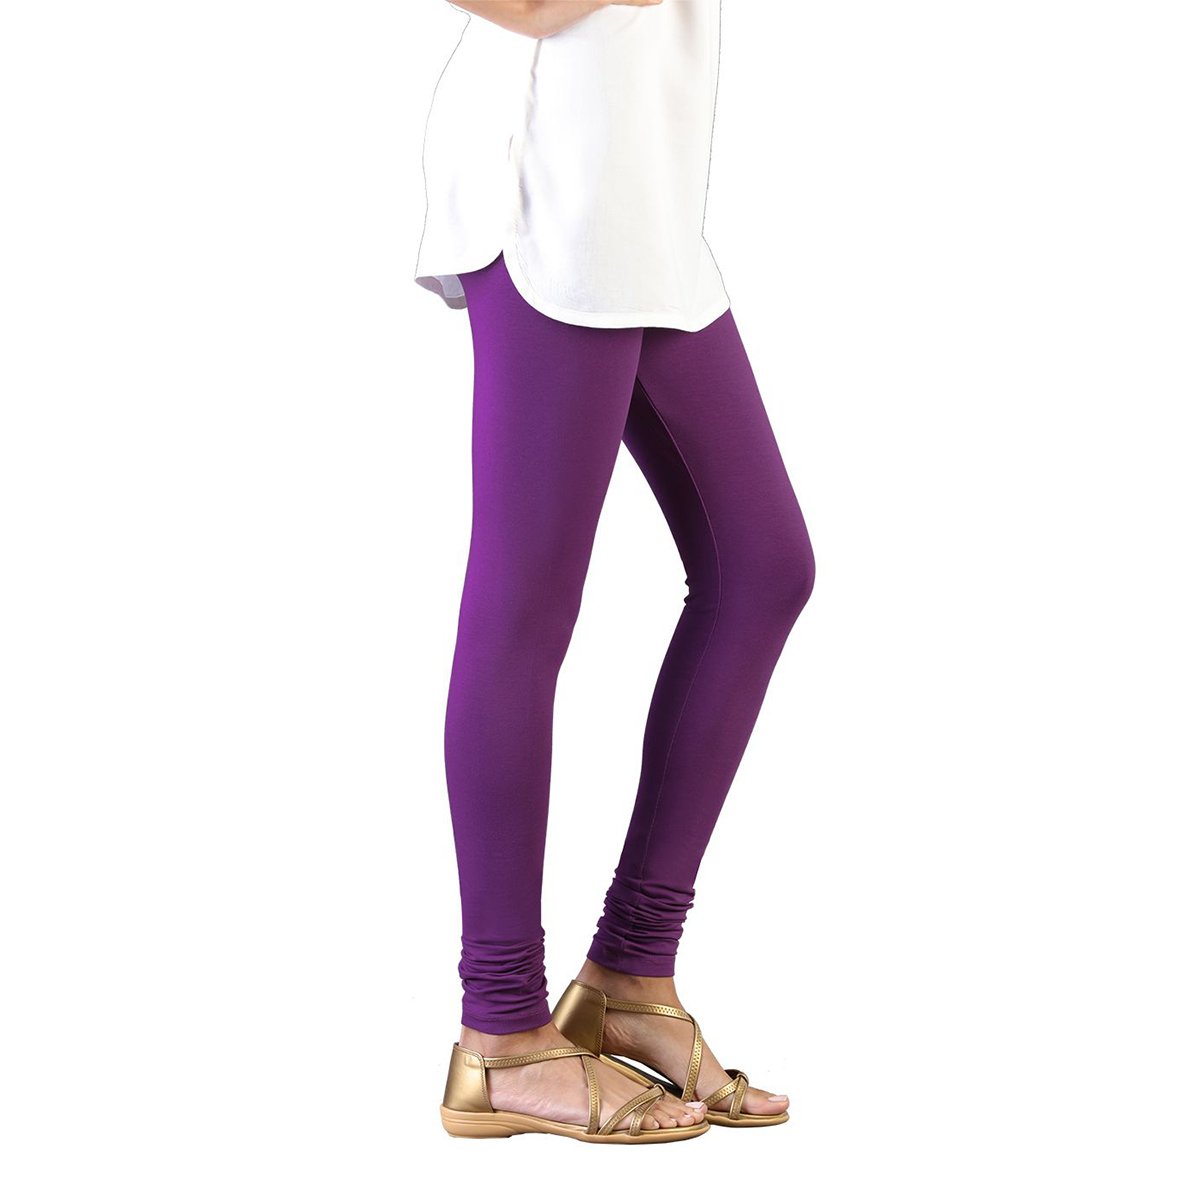 Twin Birds Women Solid Colour Churidar Legging with Signature Wide Waistband - Vapou Violet